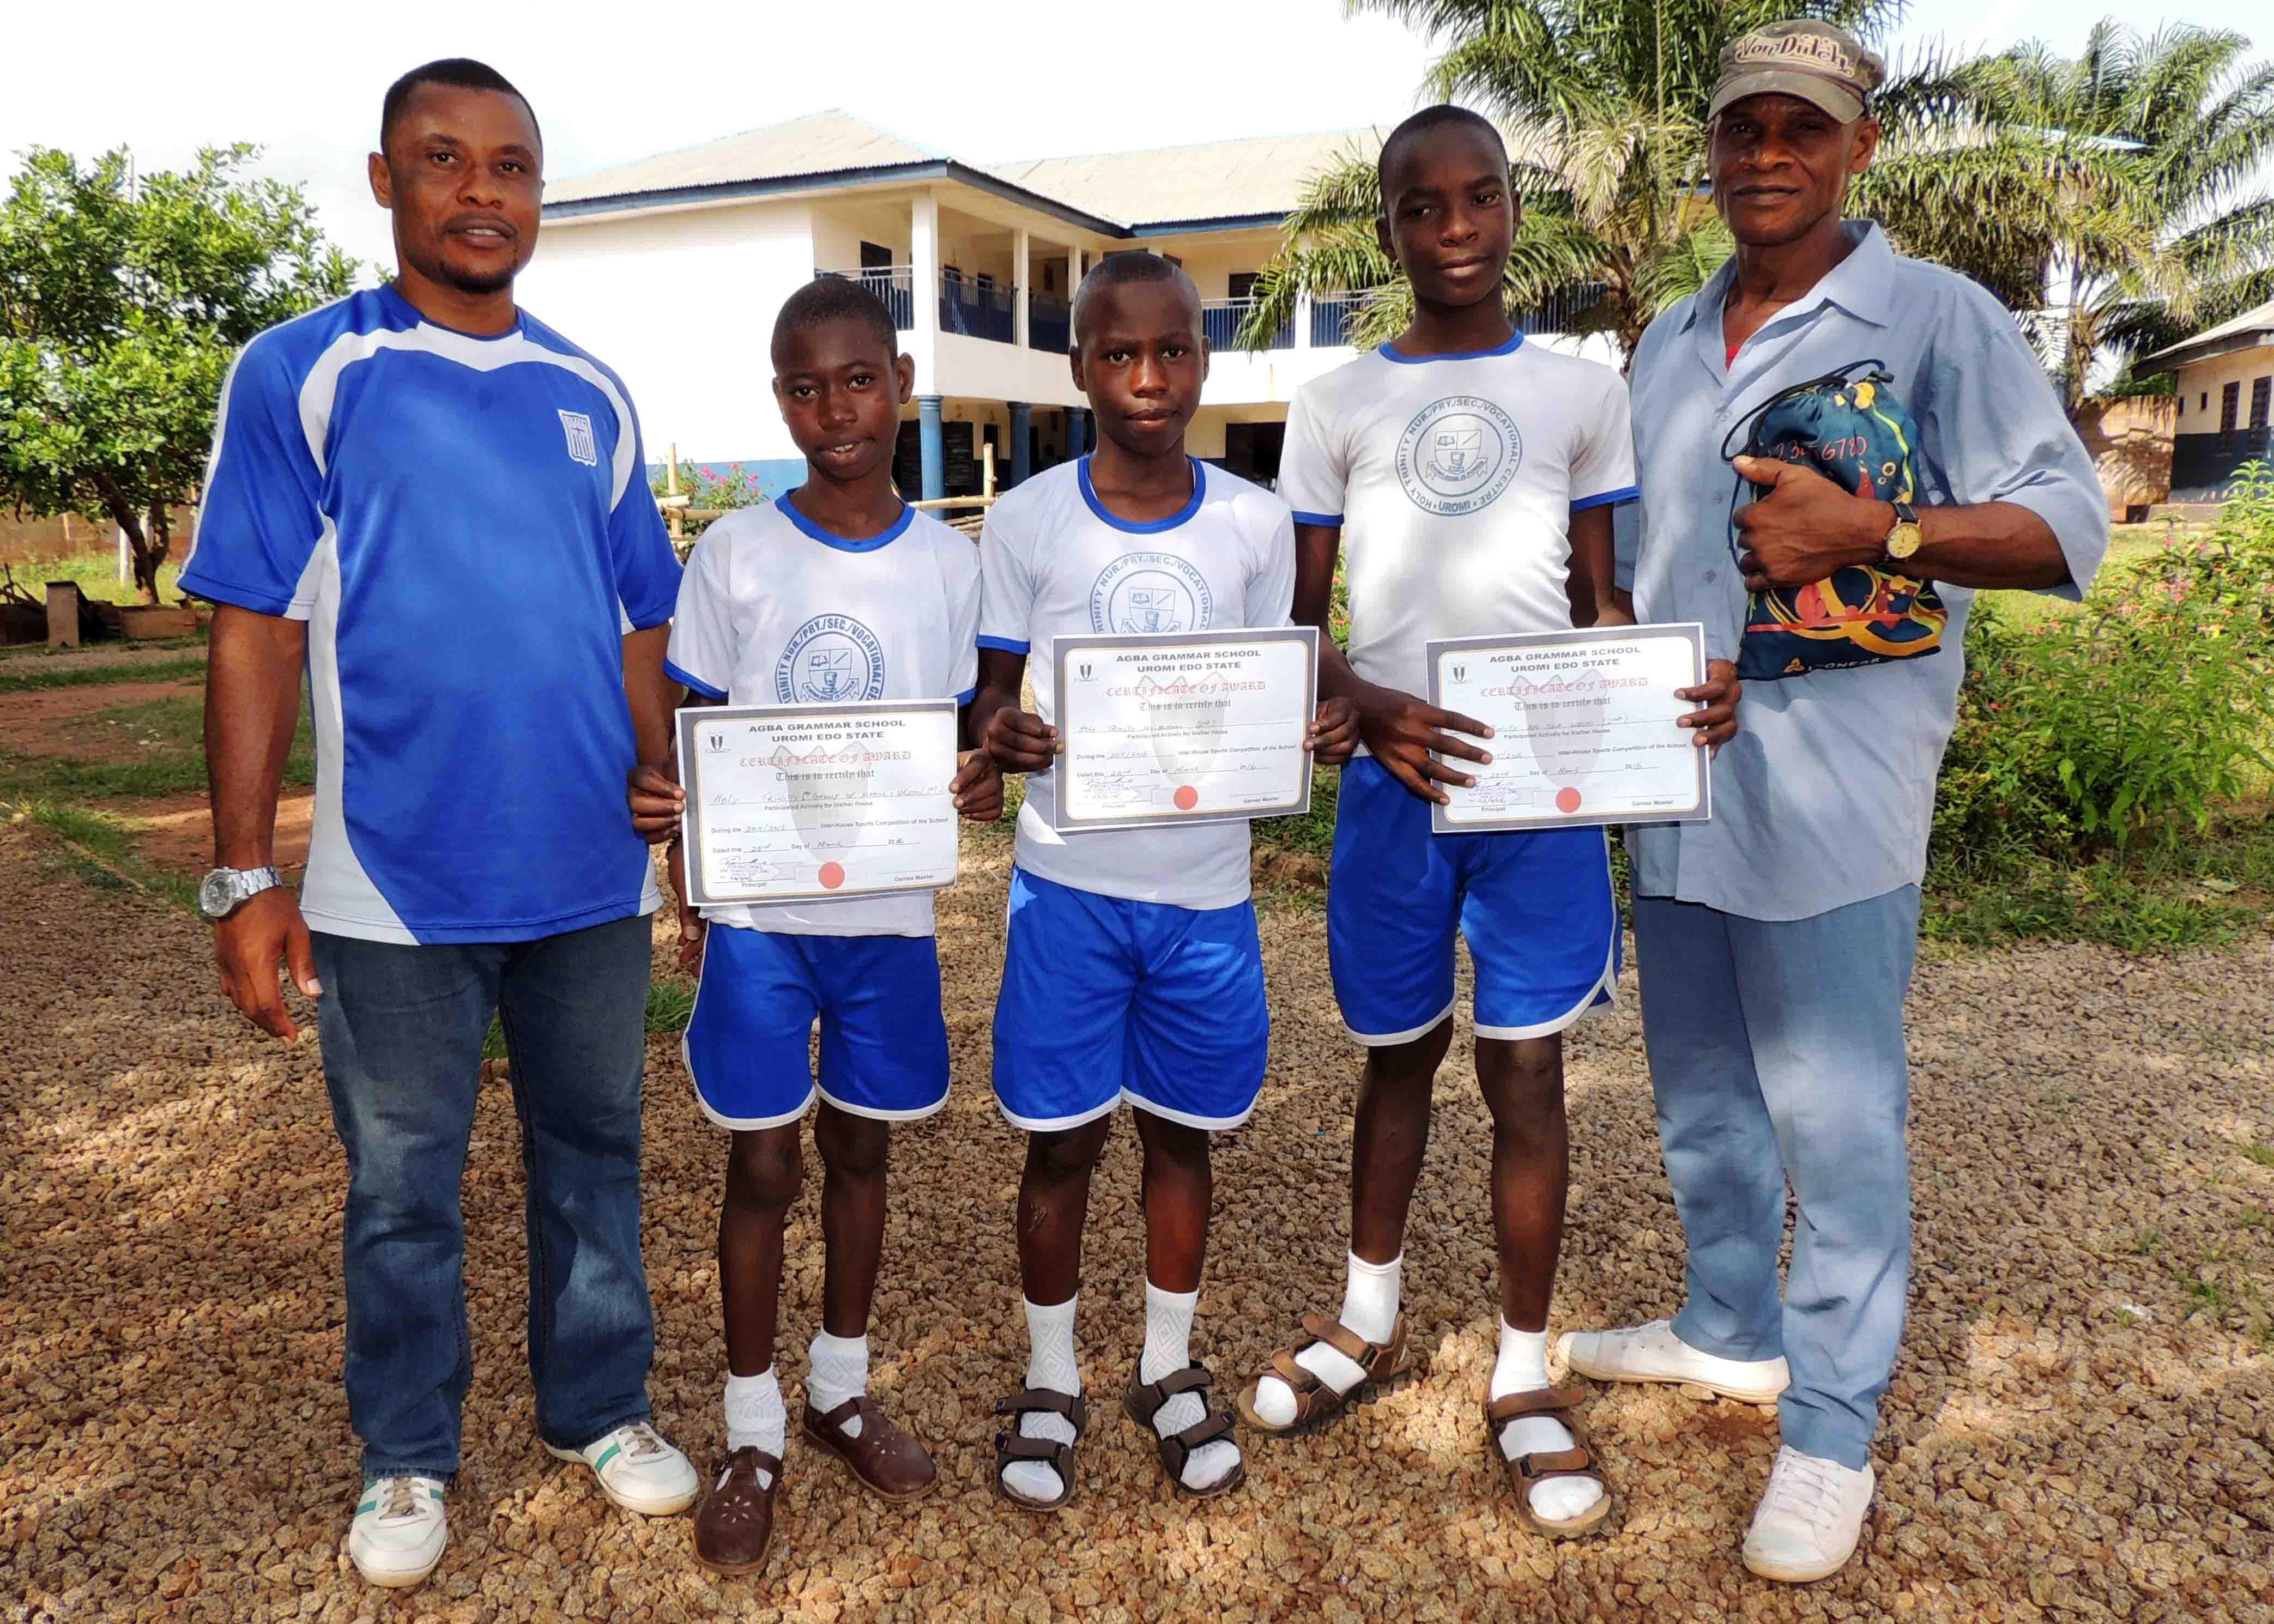 Große sportliche Erfolge in der Holy Trinity School in Uromi